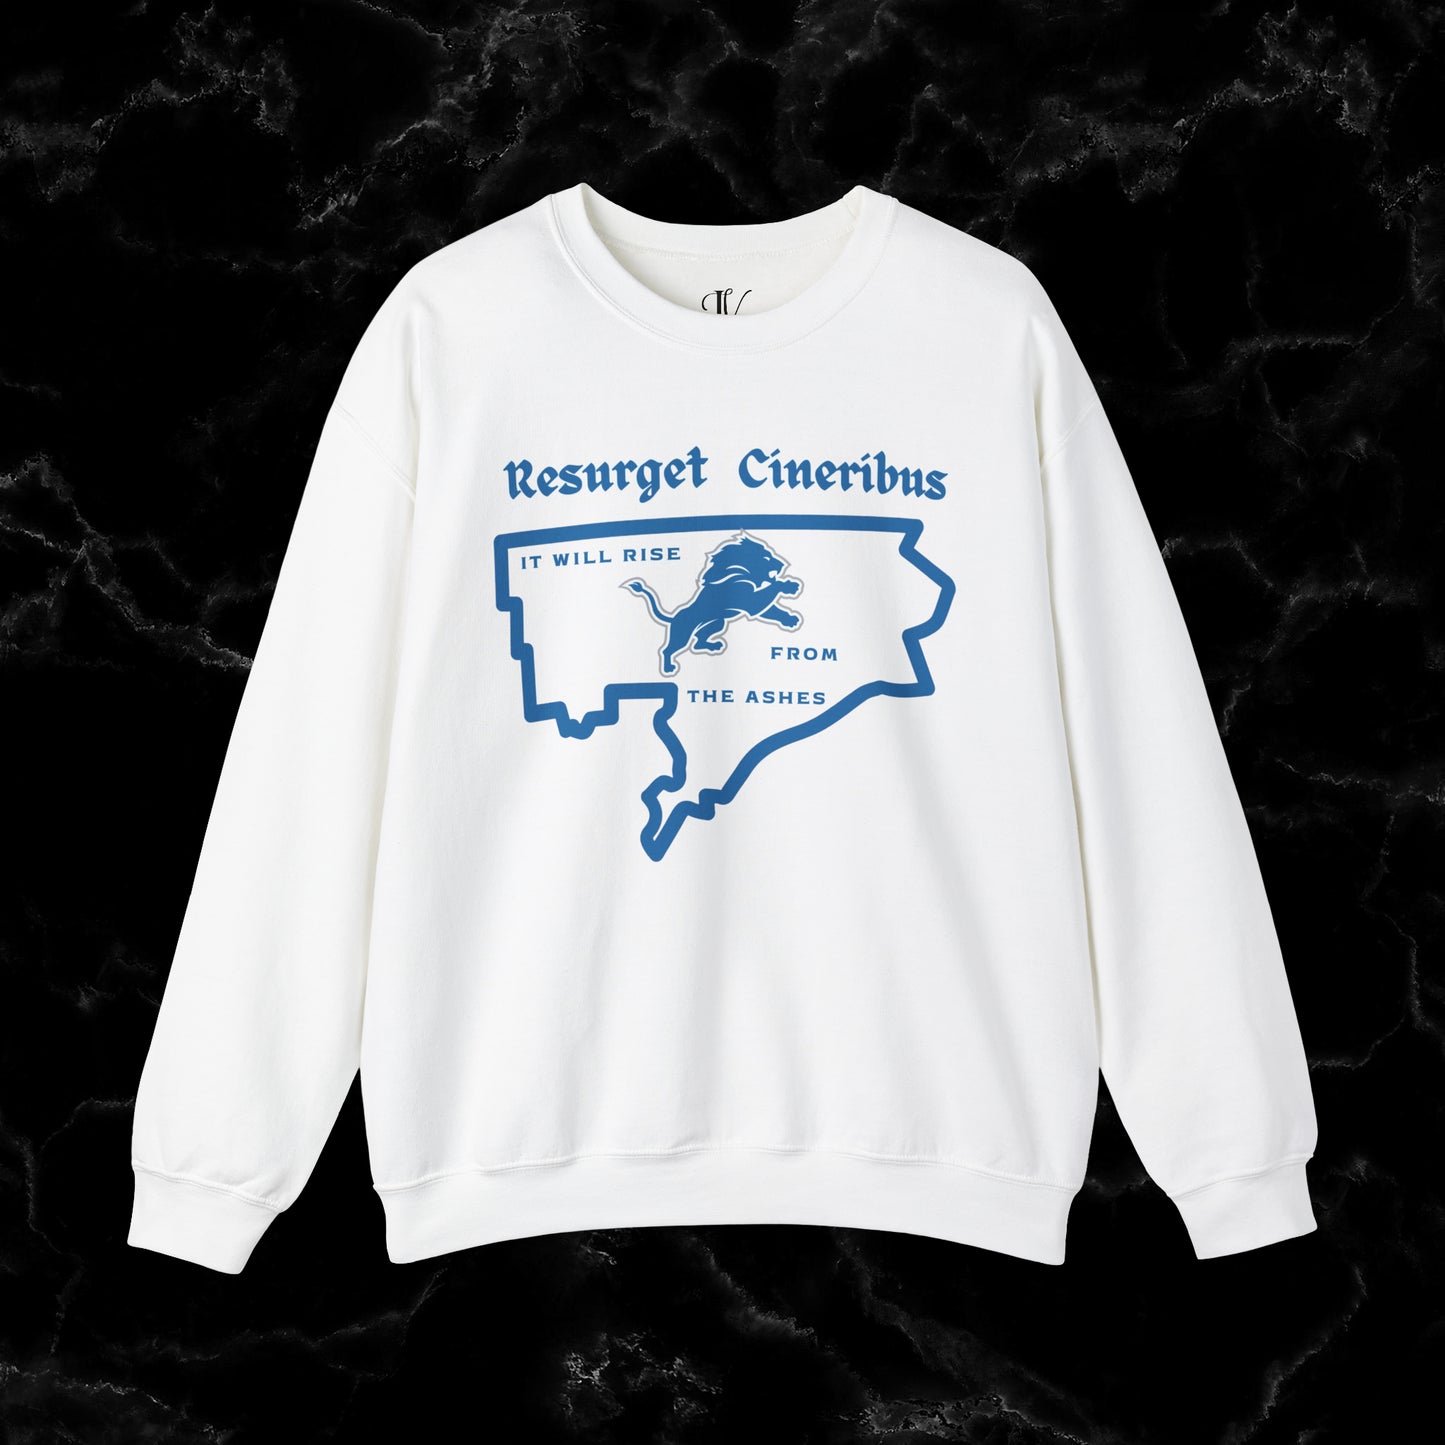 Resurget Cineribus Unisex Crewneck Sweatshirt - Latin Inspirational Gifts for Detroit Sports Football Fans Sweatshirt S White 